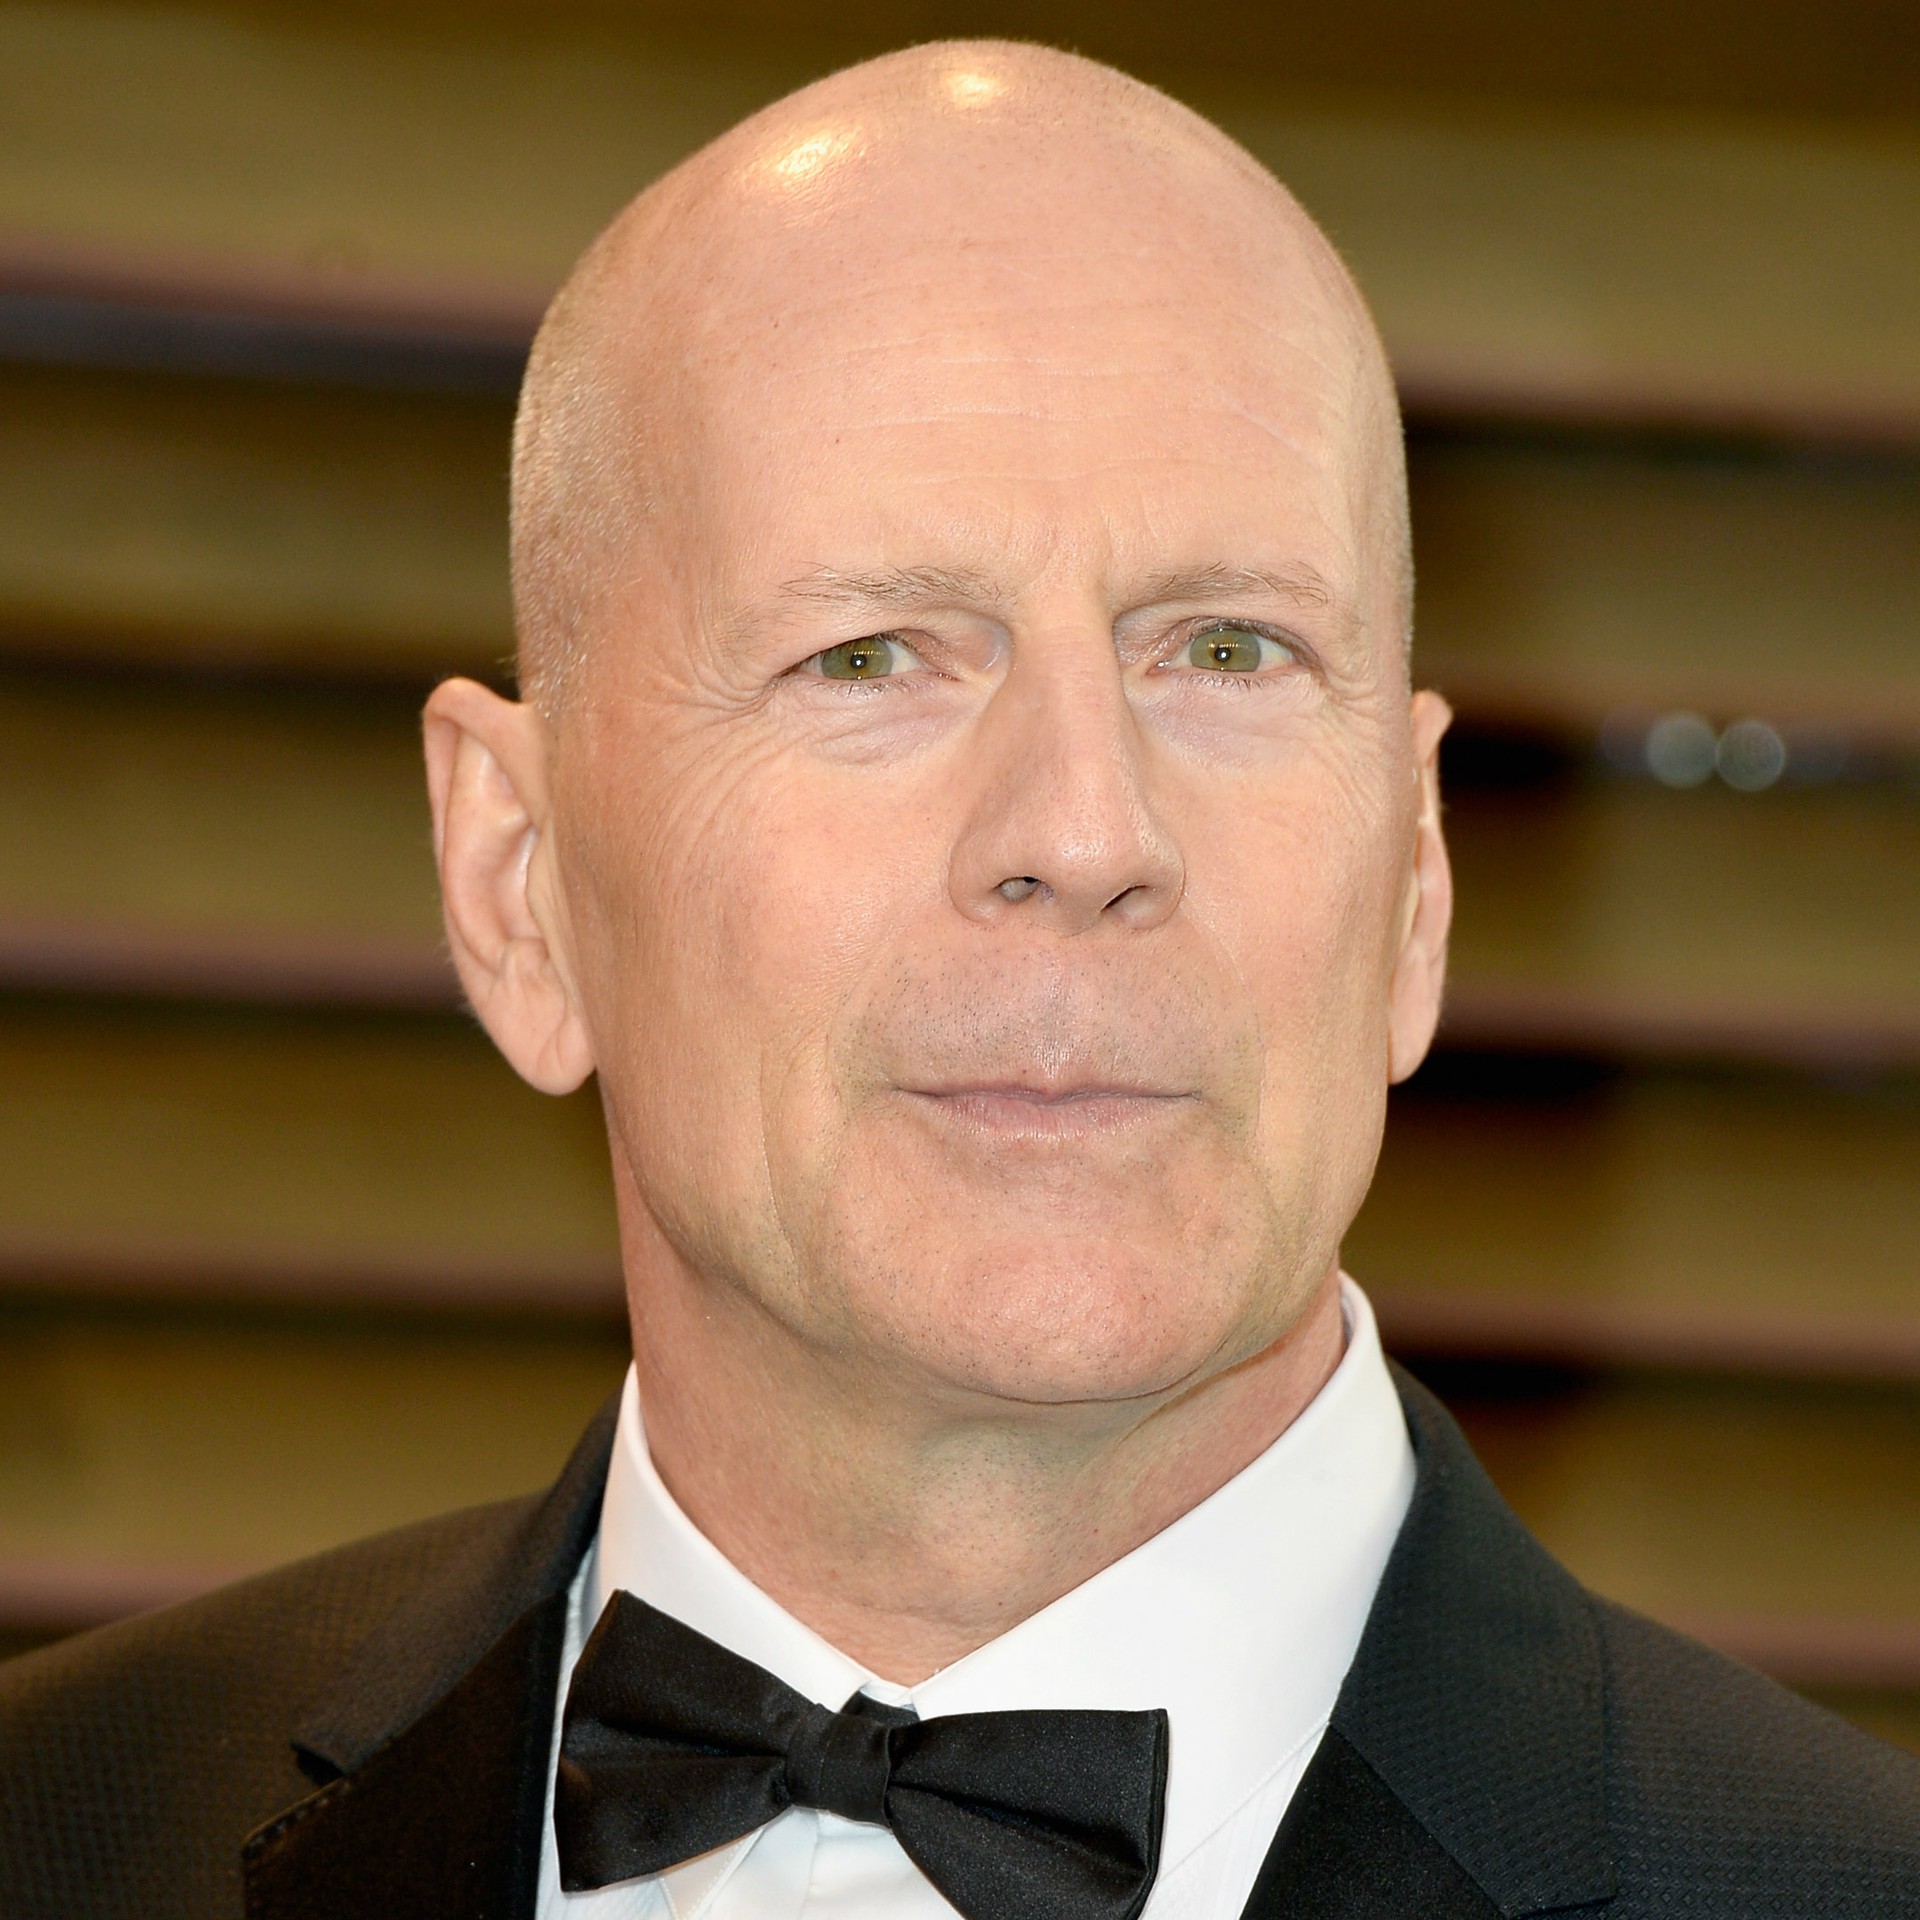 Ele só cortou o primeiro nome. Este é o ator Walter Bruce Willis. (Foto: Getty Images)